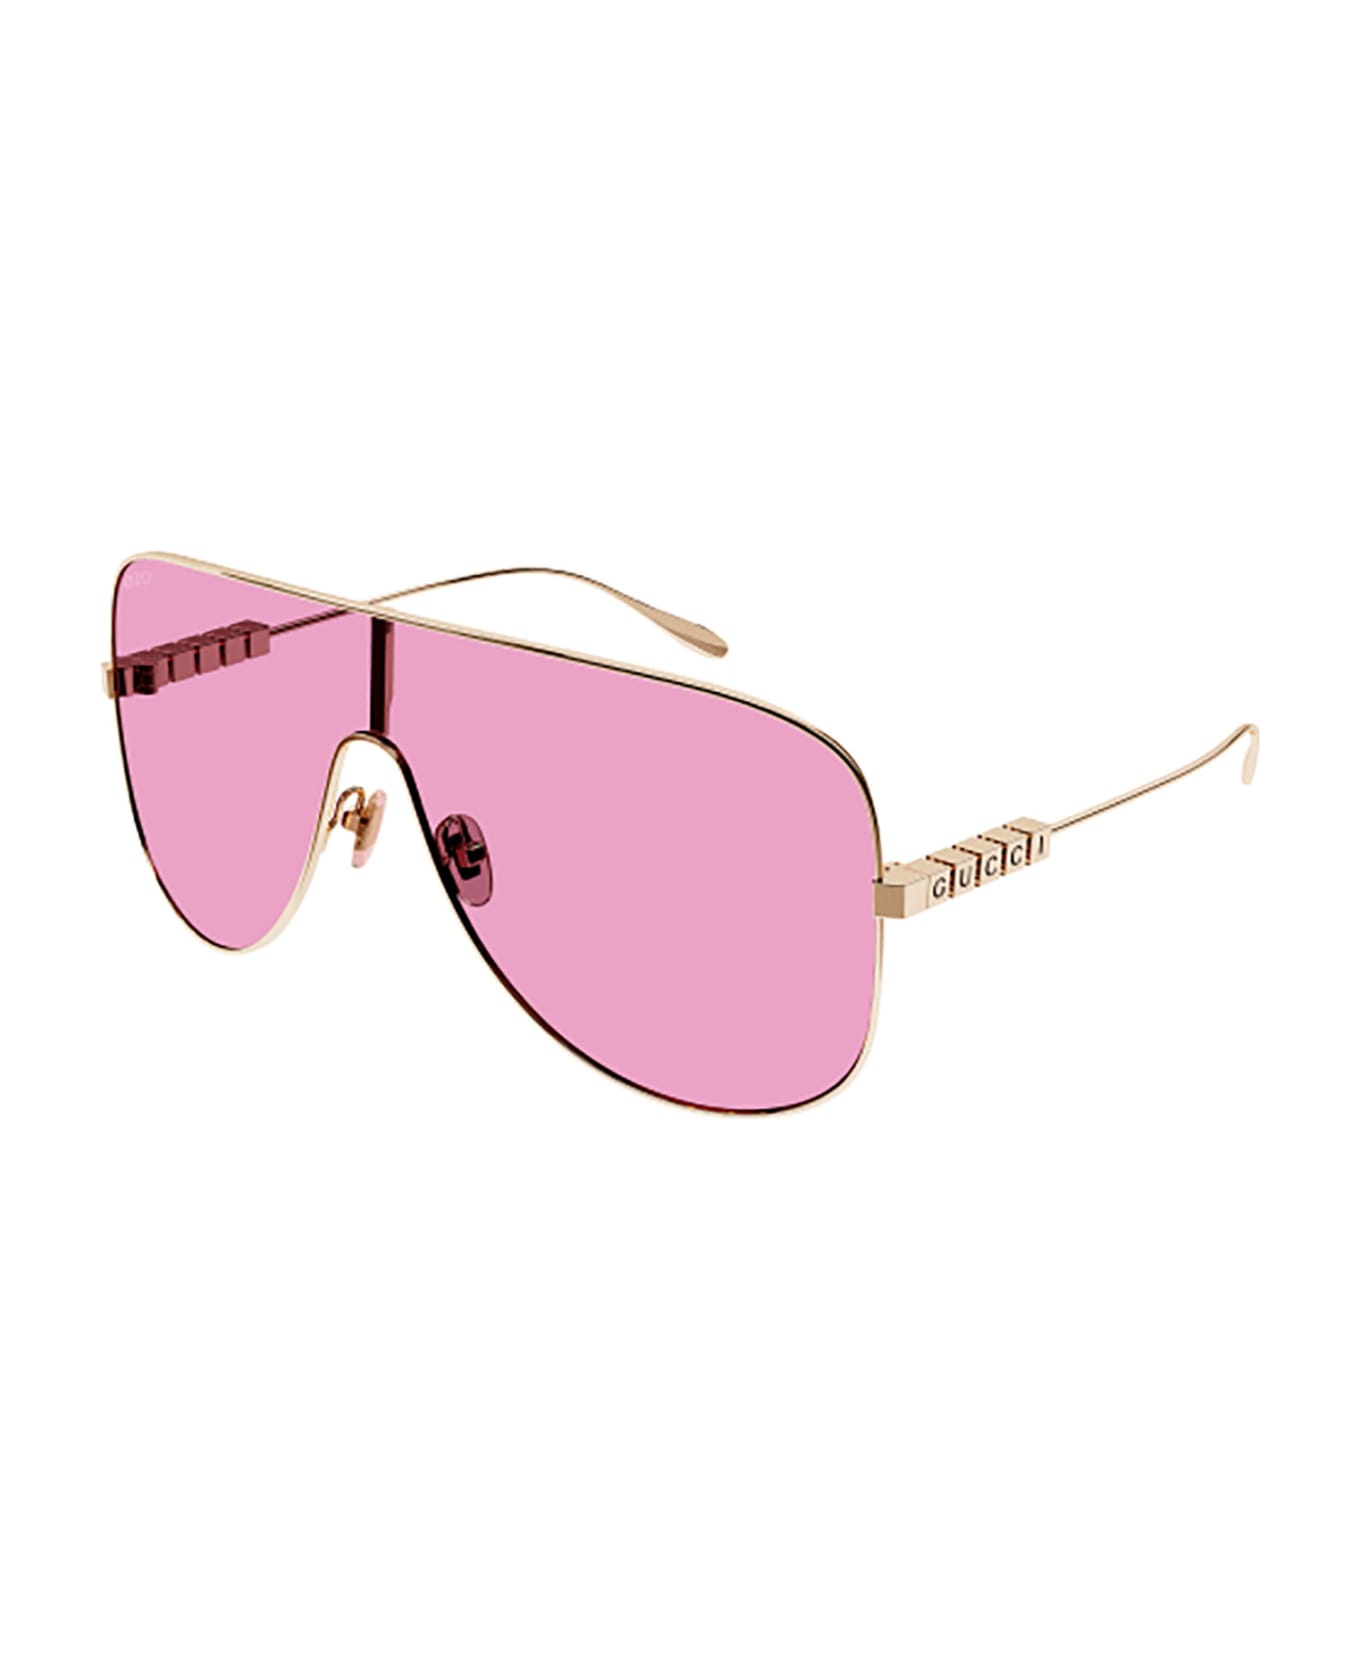 Gucci Eyewear GG1436S Sunglasses - Gold Gold Pink